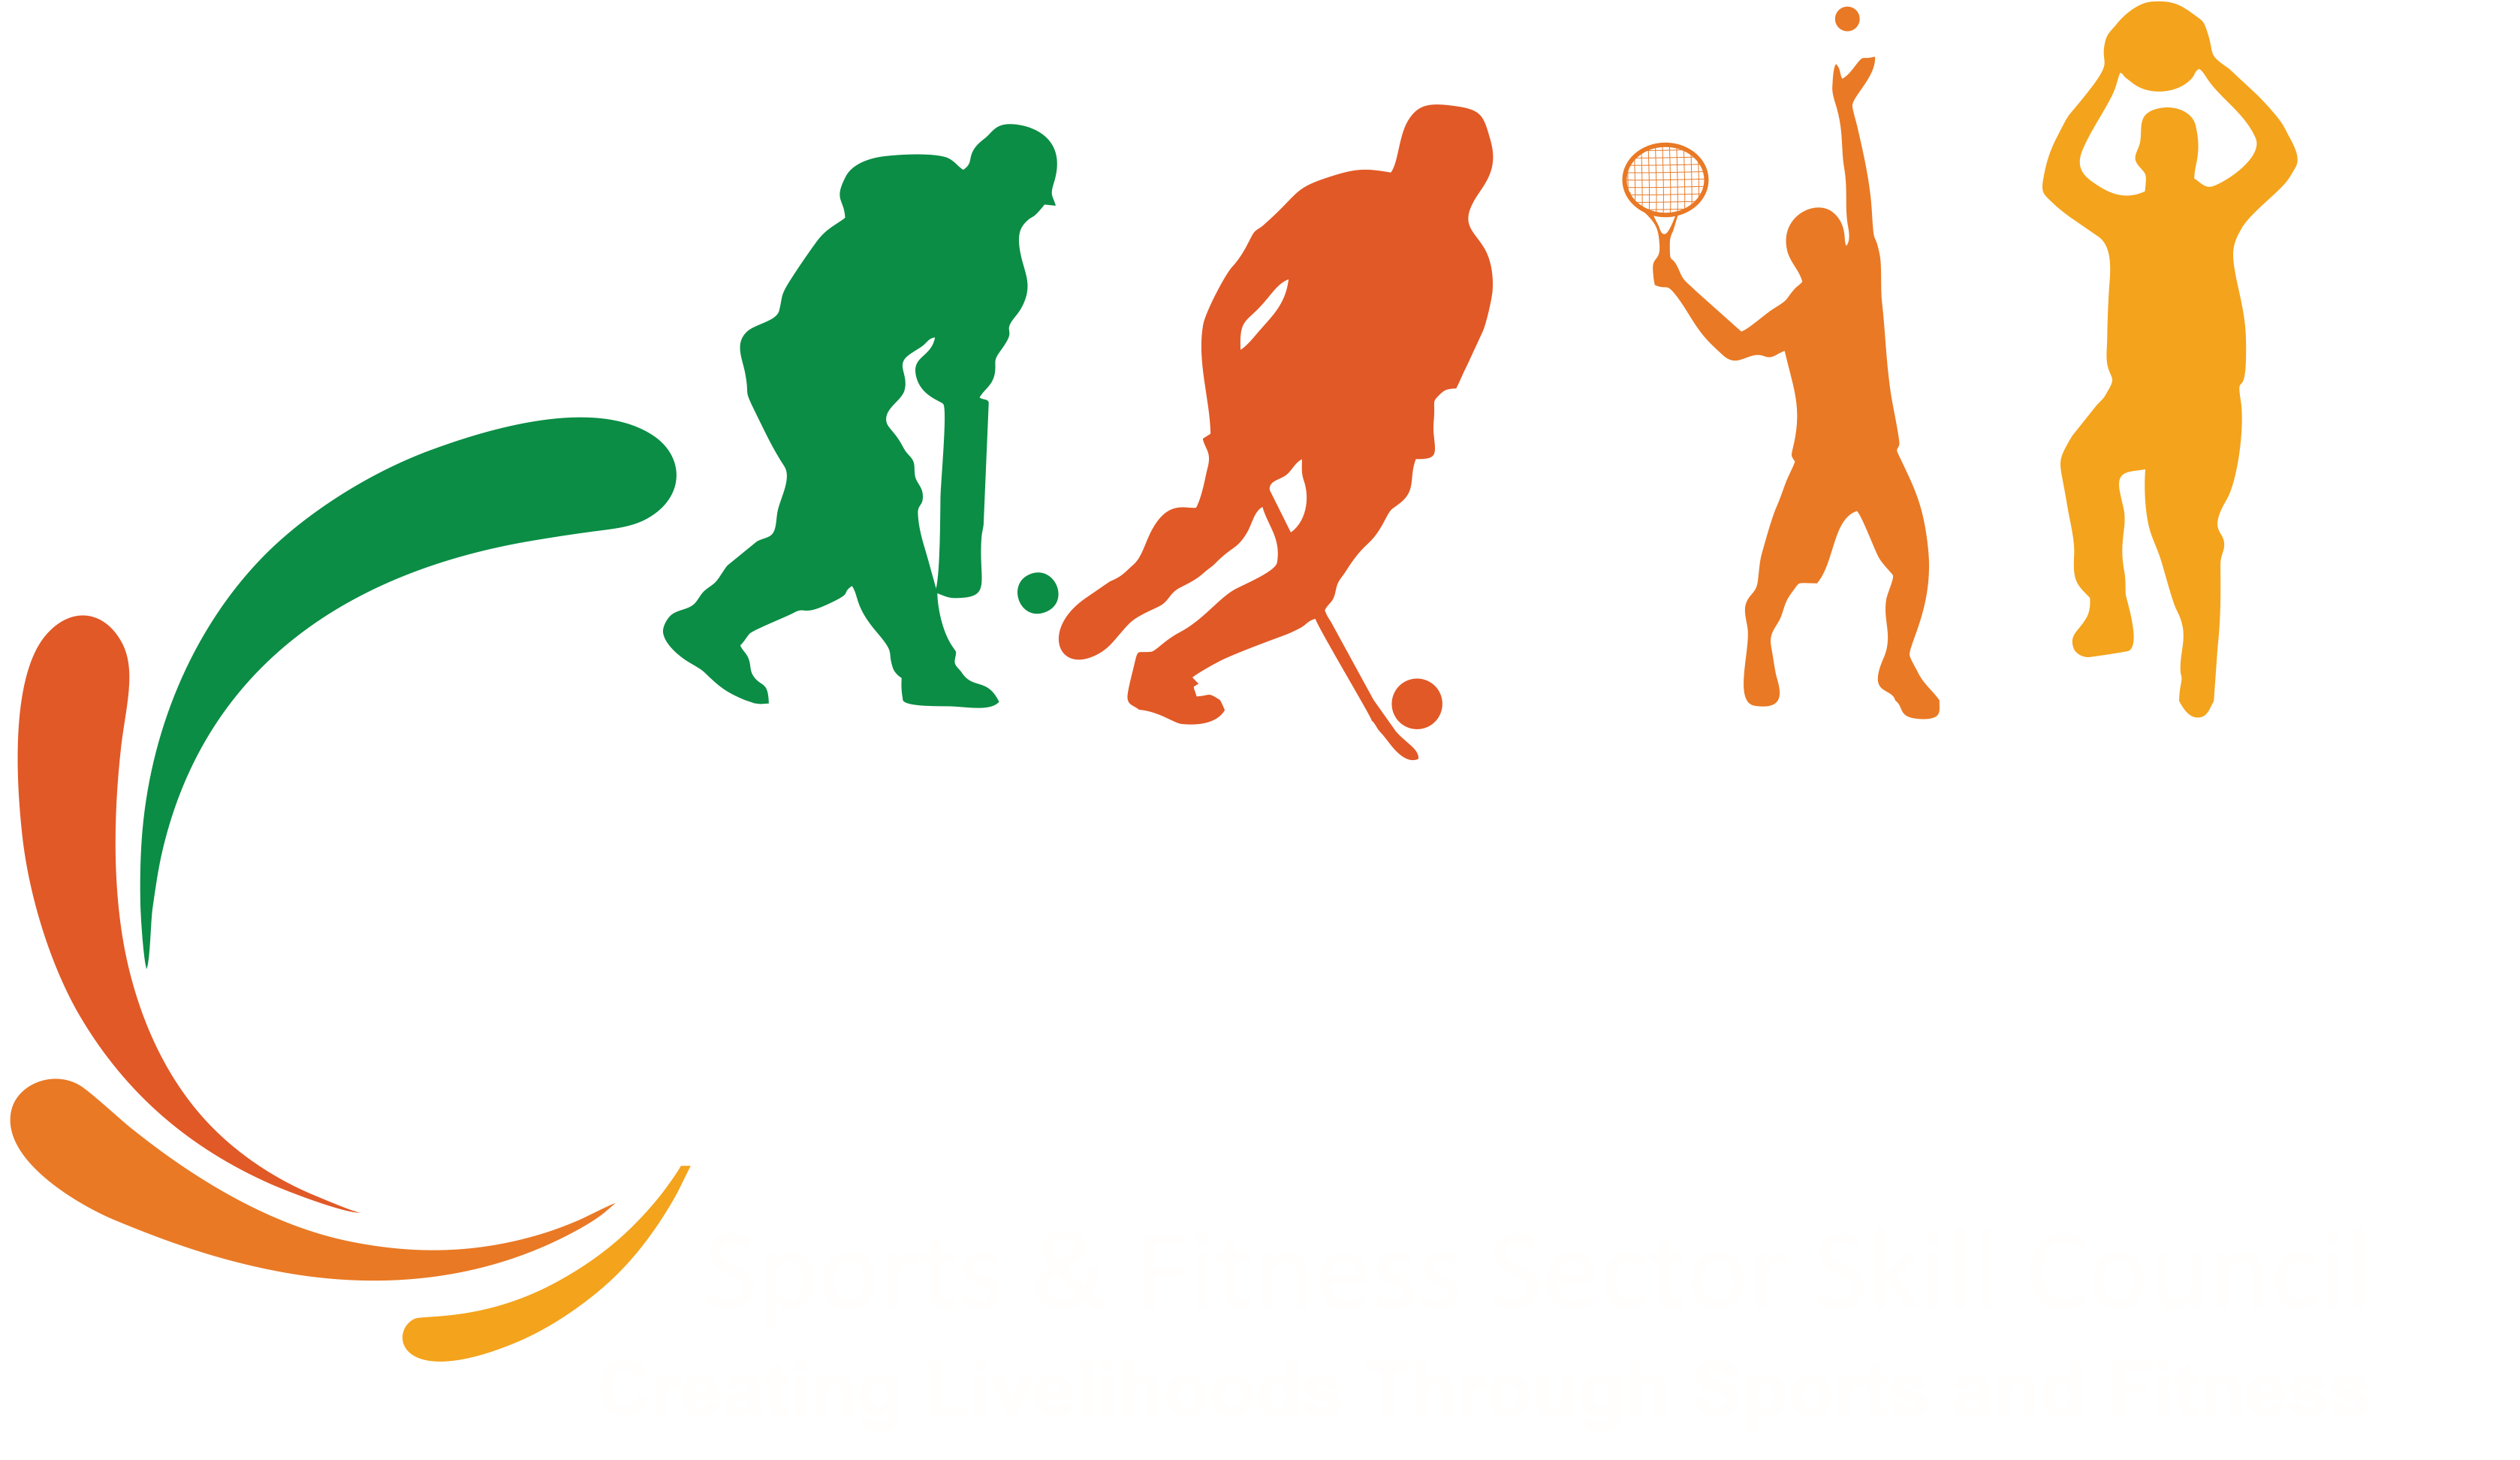 https://sportsskills.in/images/main%20logos/footer-logo2.png